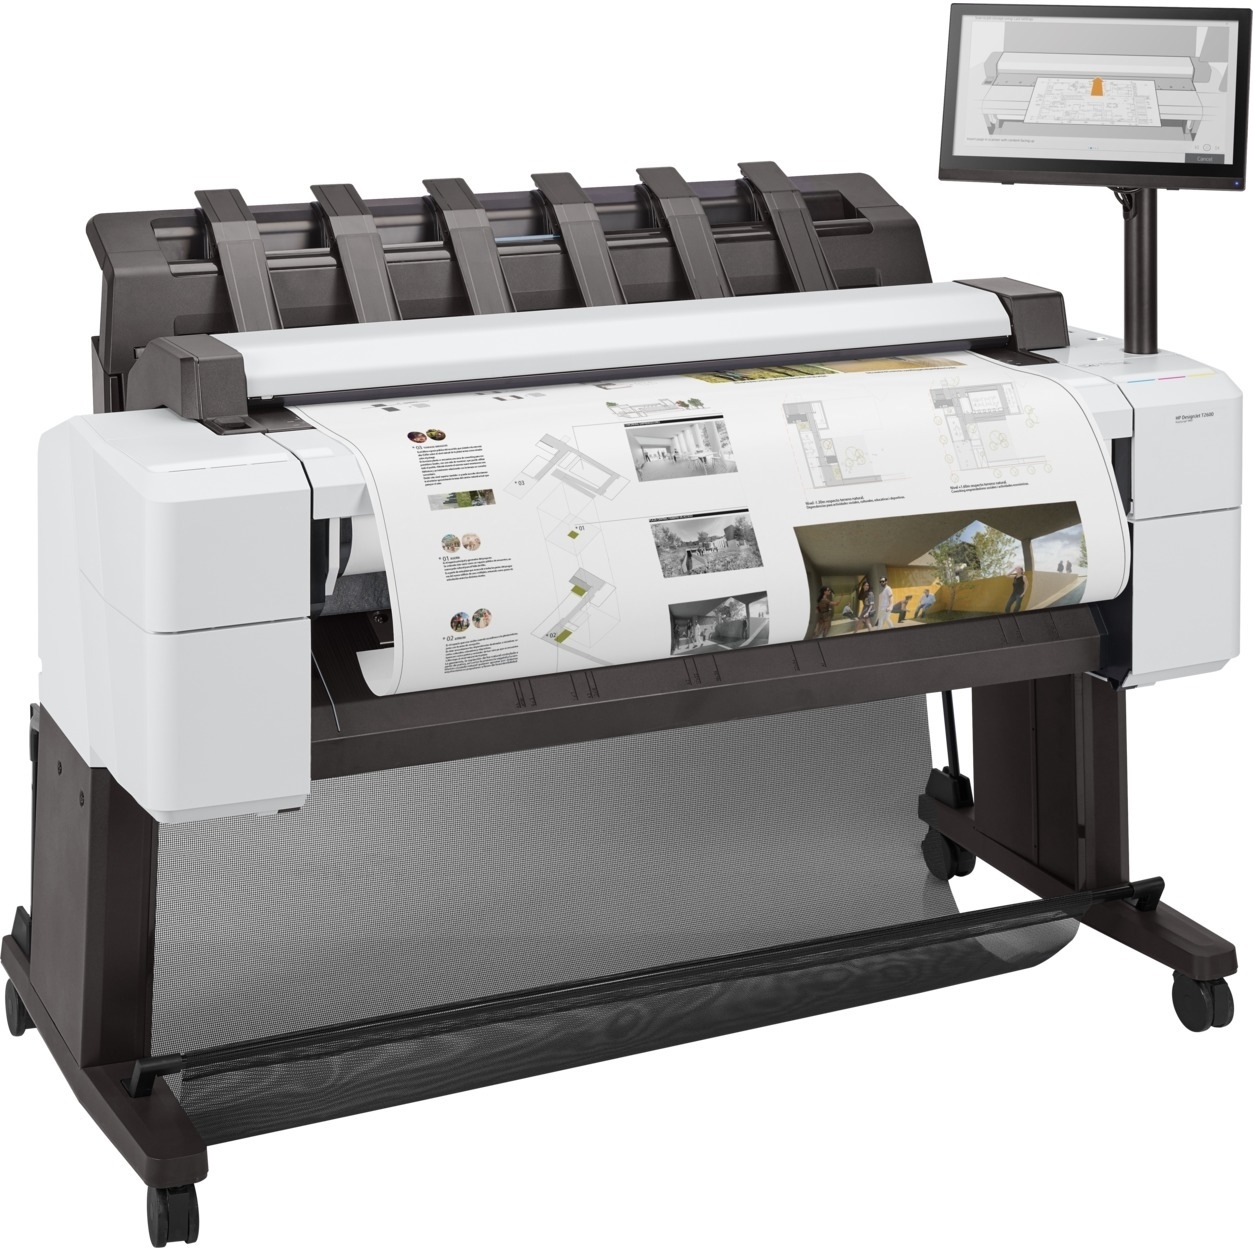 HP Designjet T2600 PostScript Inkjet Large Format Printer - 36